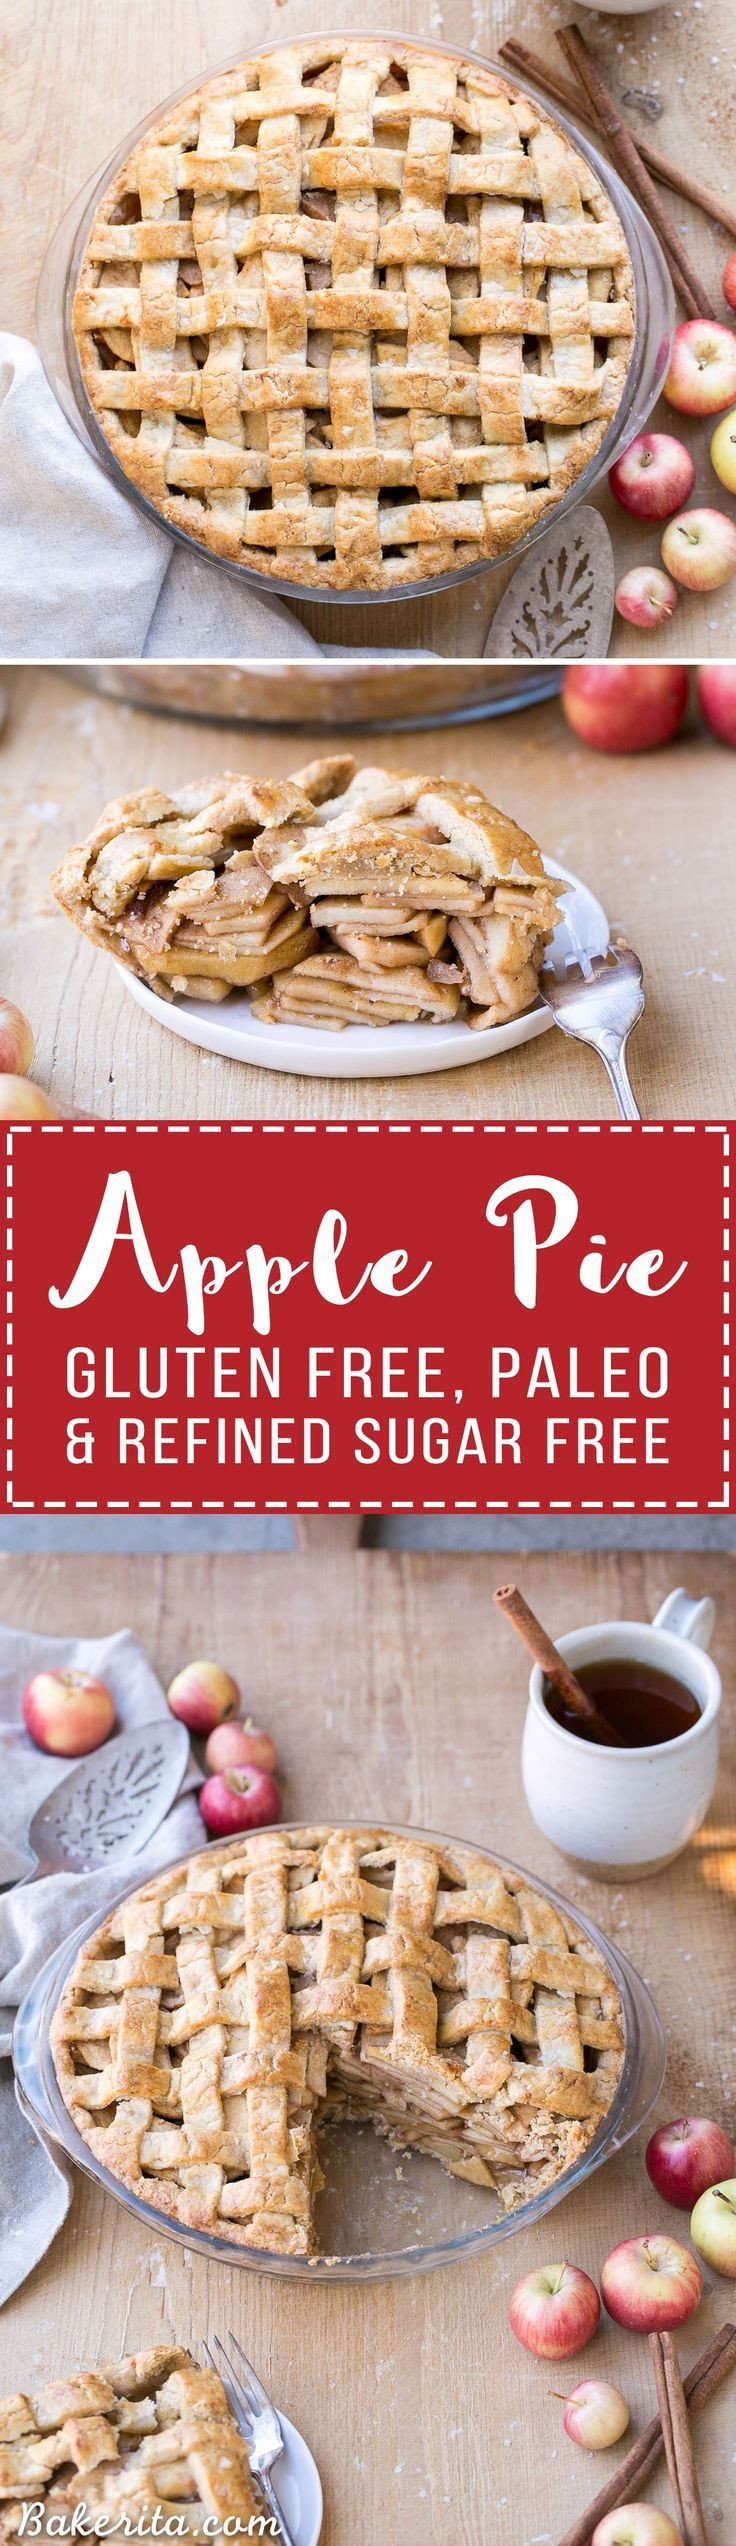 Gluten Free Apple Pie Filling
 This Paleo Apple Pie has a flaky gluten free lattice crust